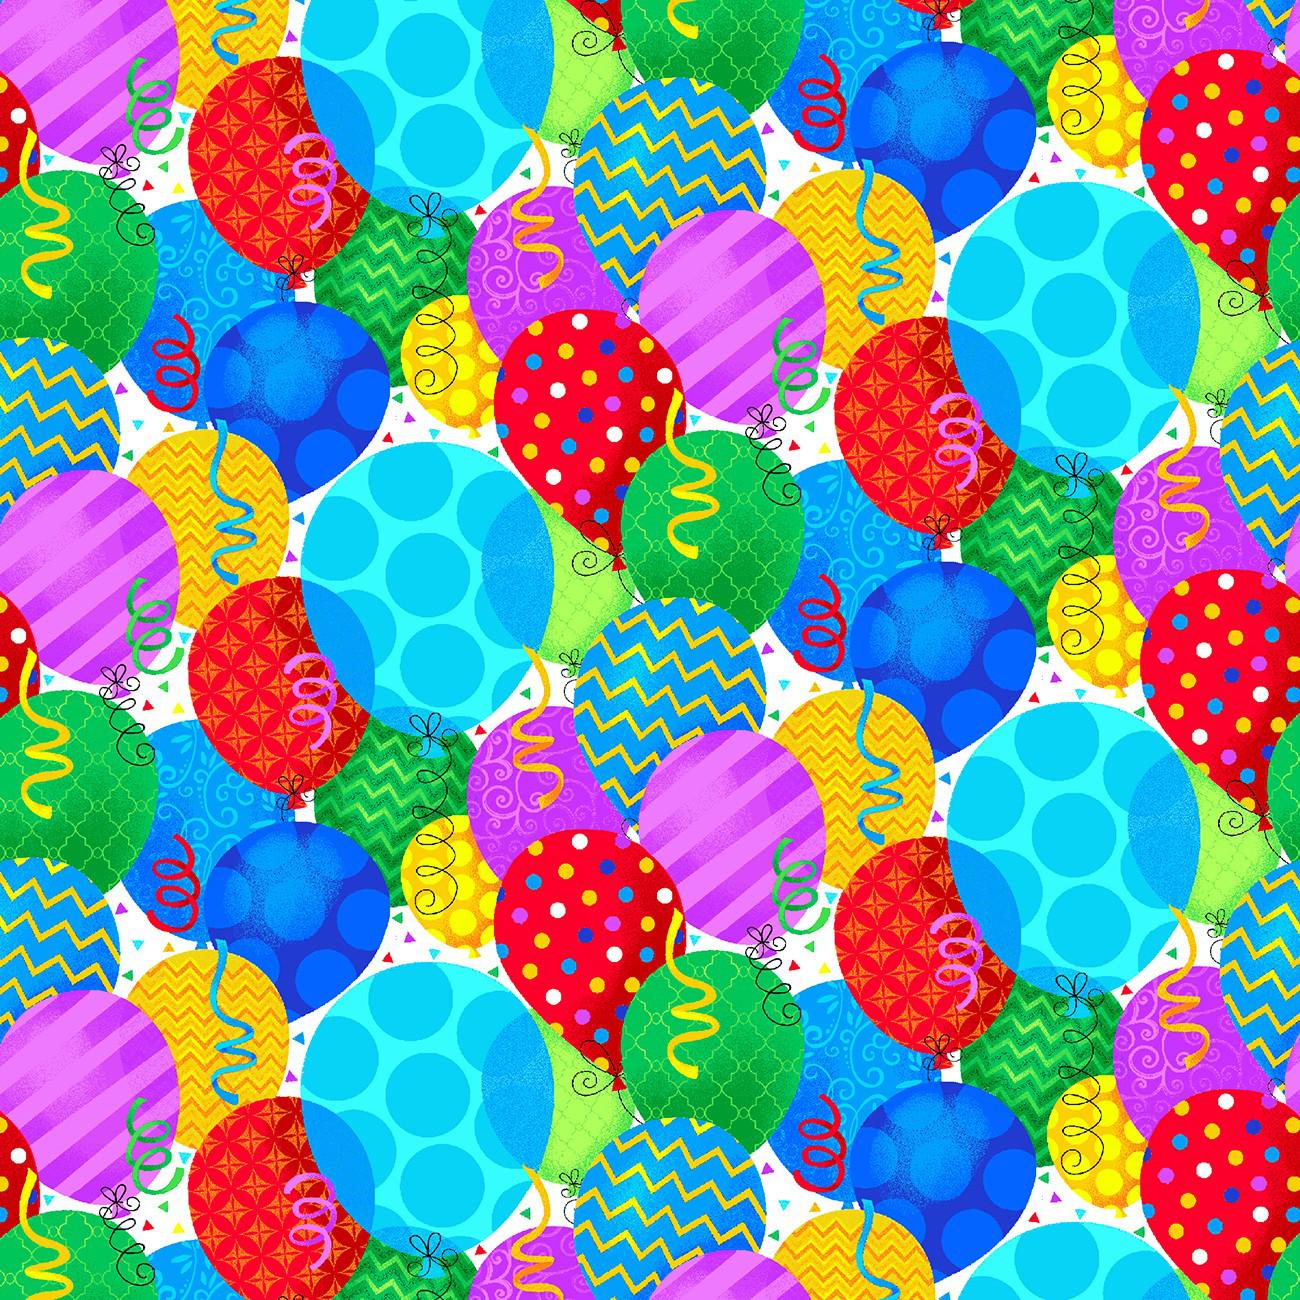 Cranston balloon fabric/material  Balloons, Fabric material, Fabric